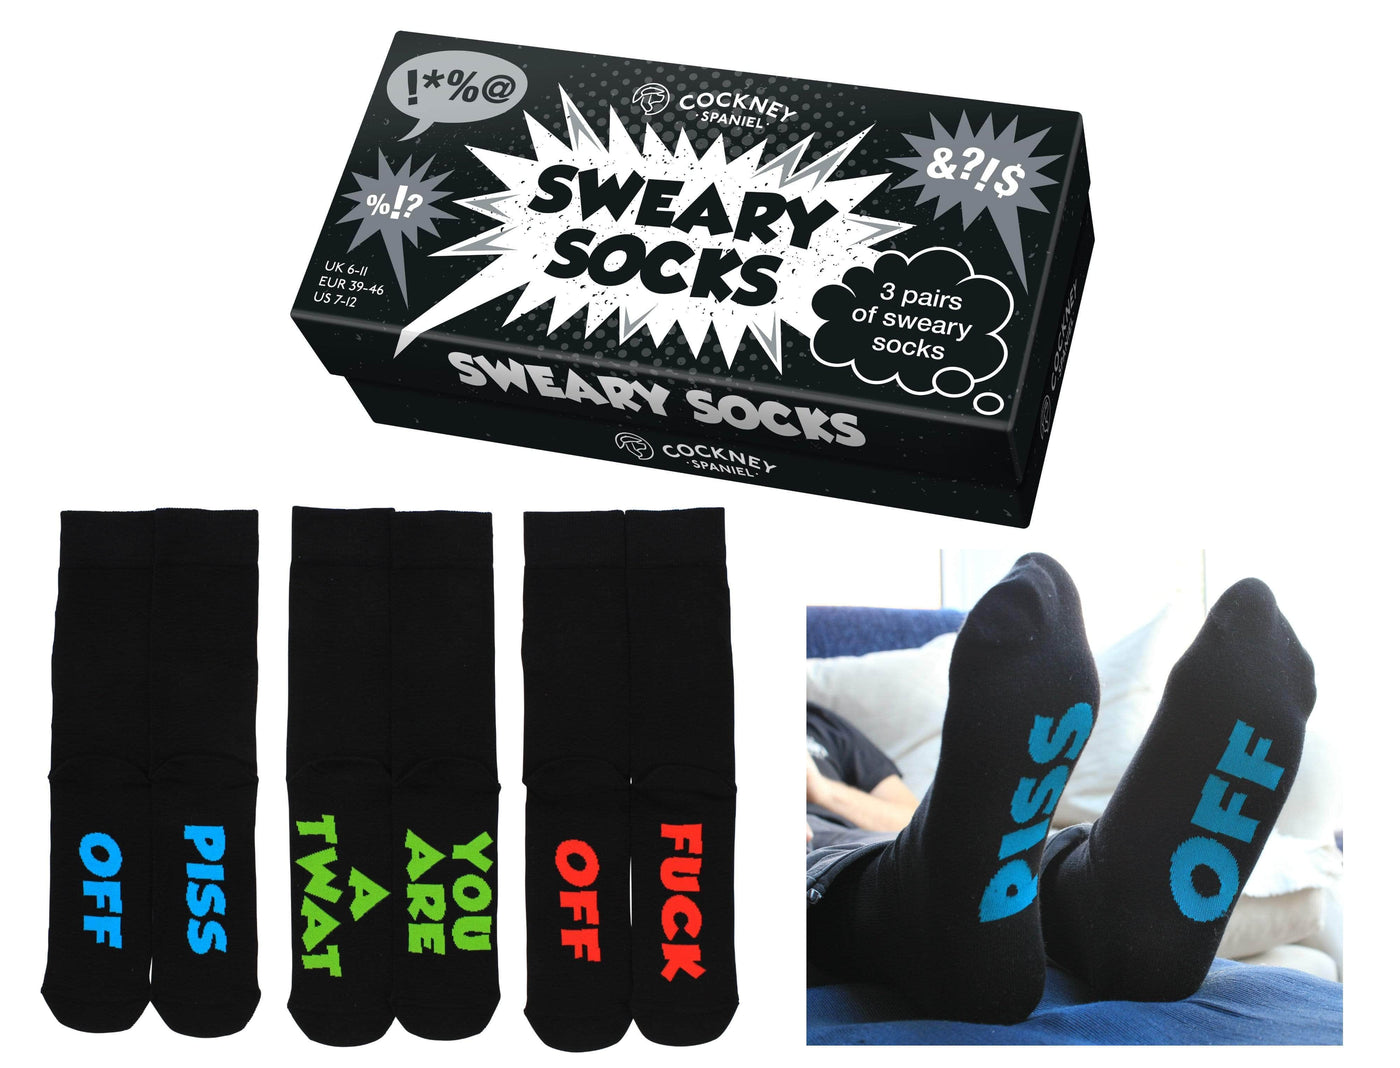 United Odd Socks Socks Novelty Sweary Socks in Gift Box